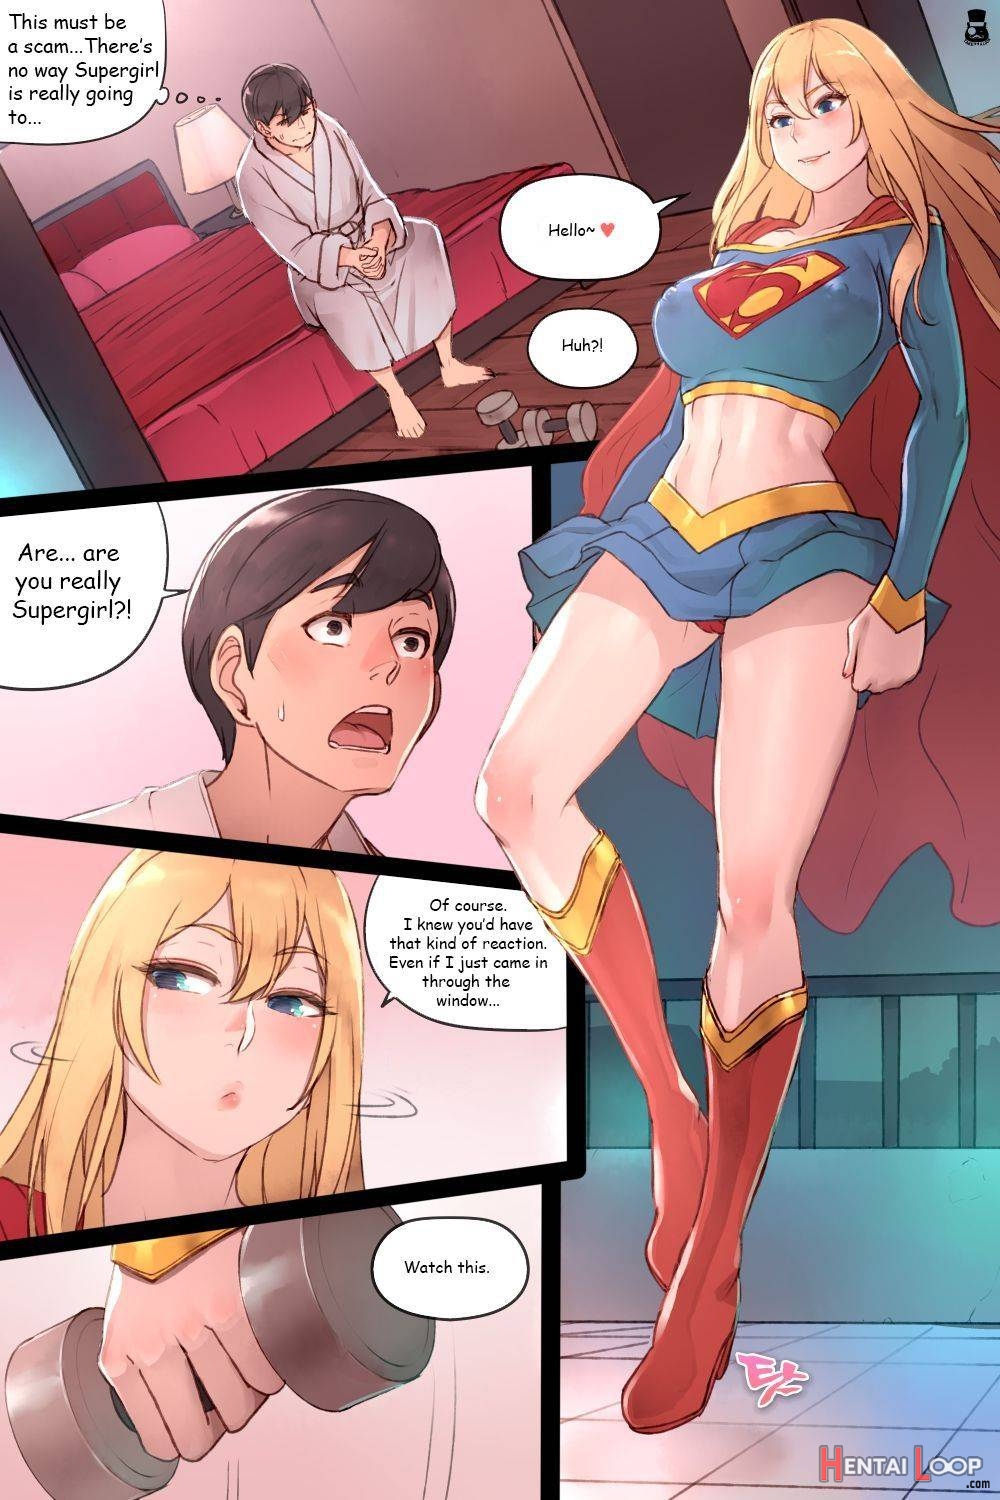 Supergirl hentai